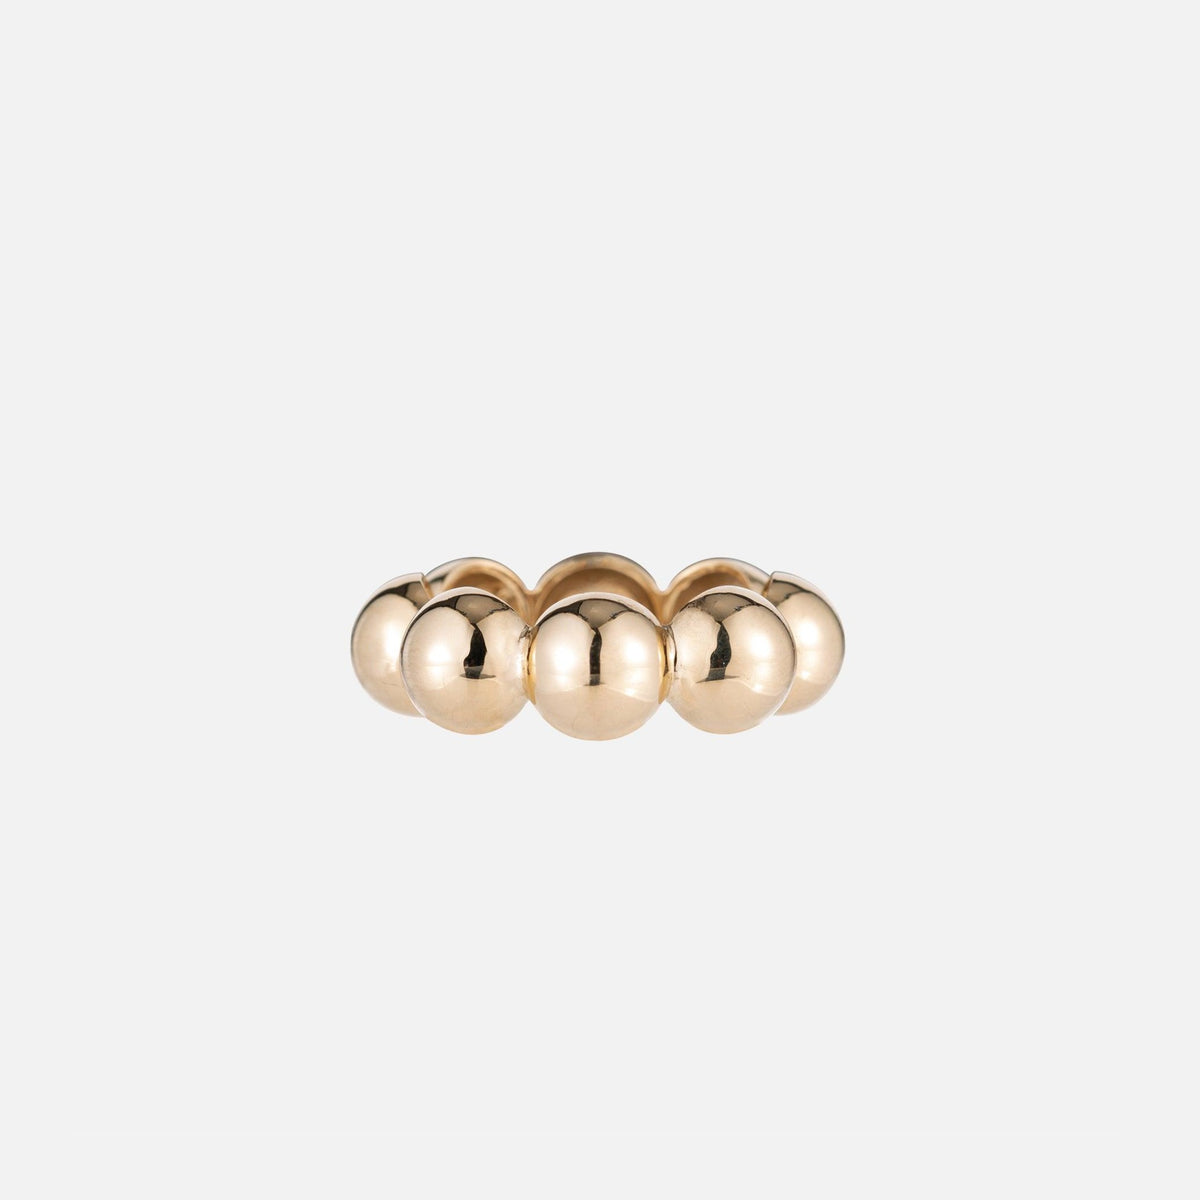 XL Bubble Ring - Ariel Gordon Jewelry - At Present